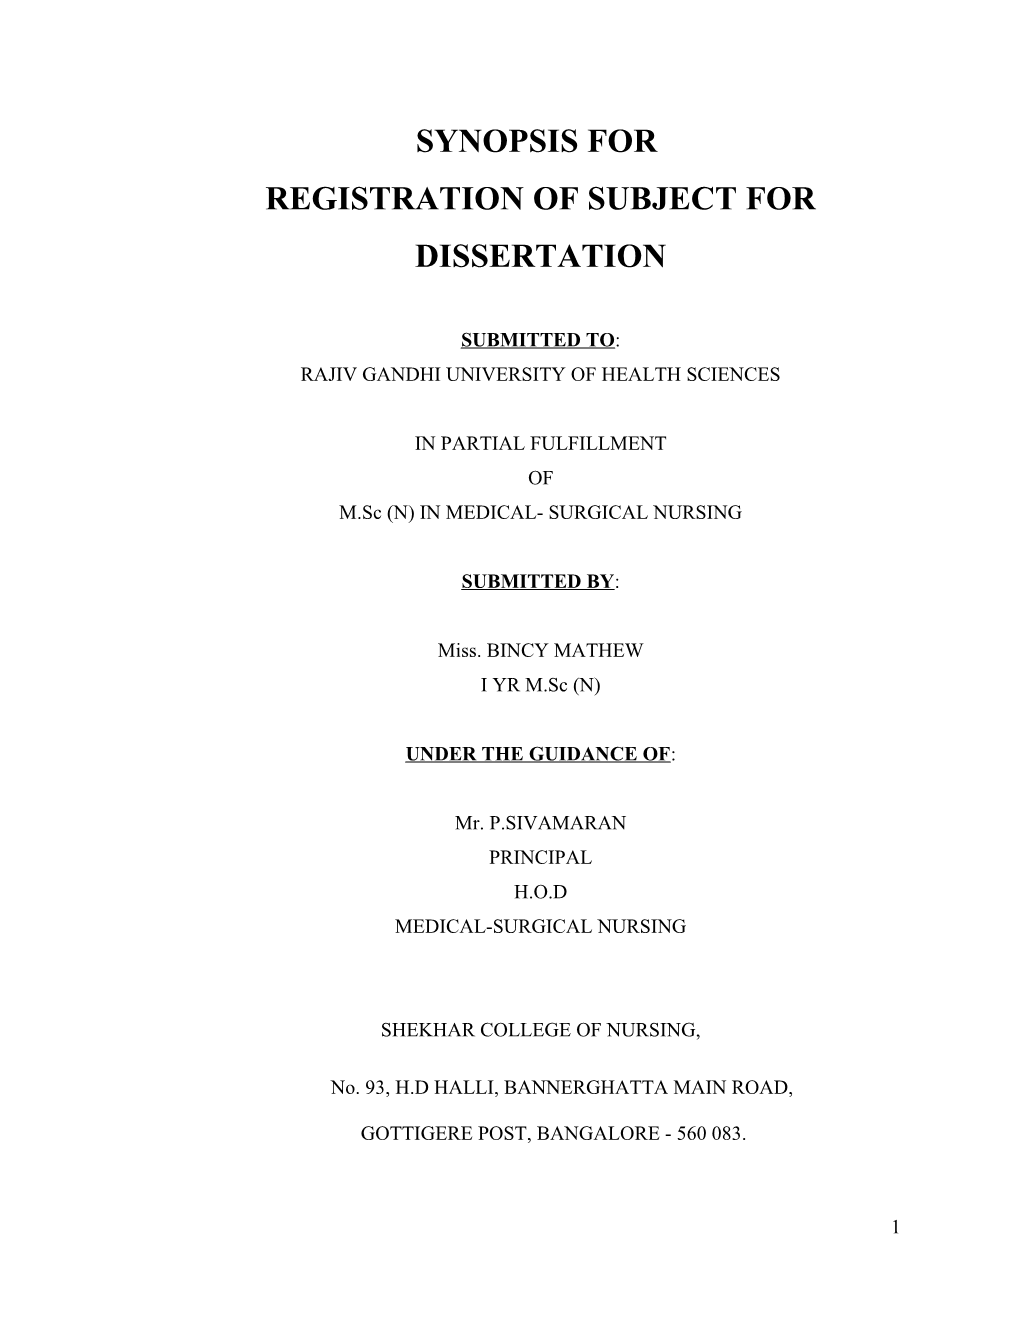 Registration of Subject for Dissertation s1